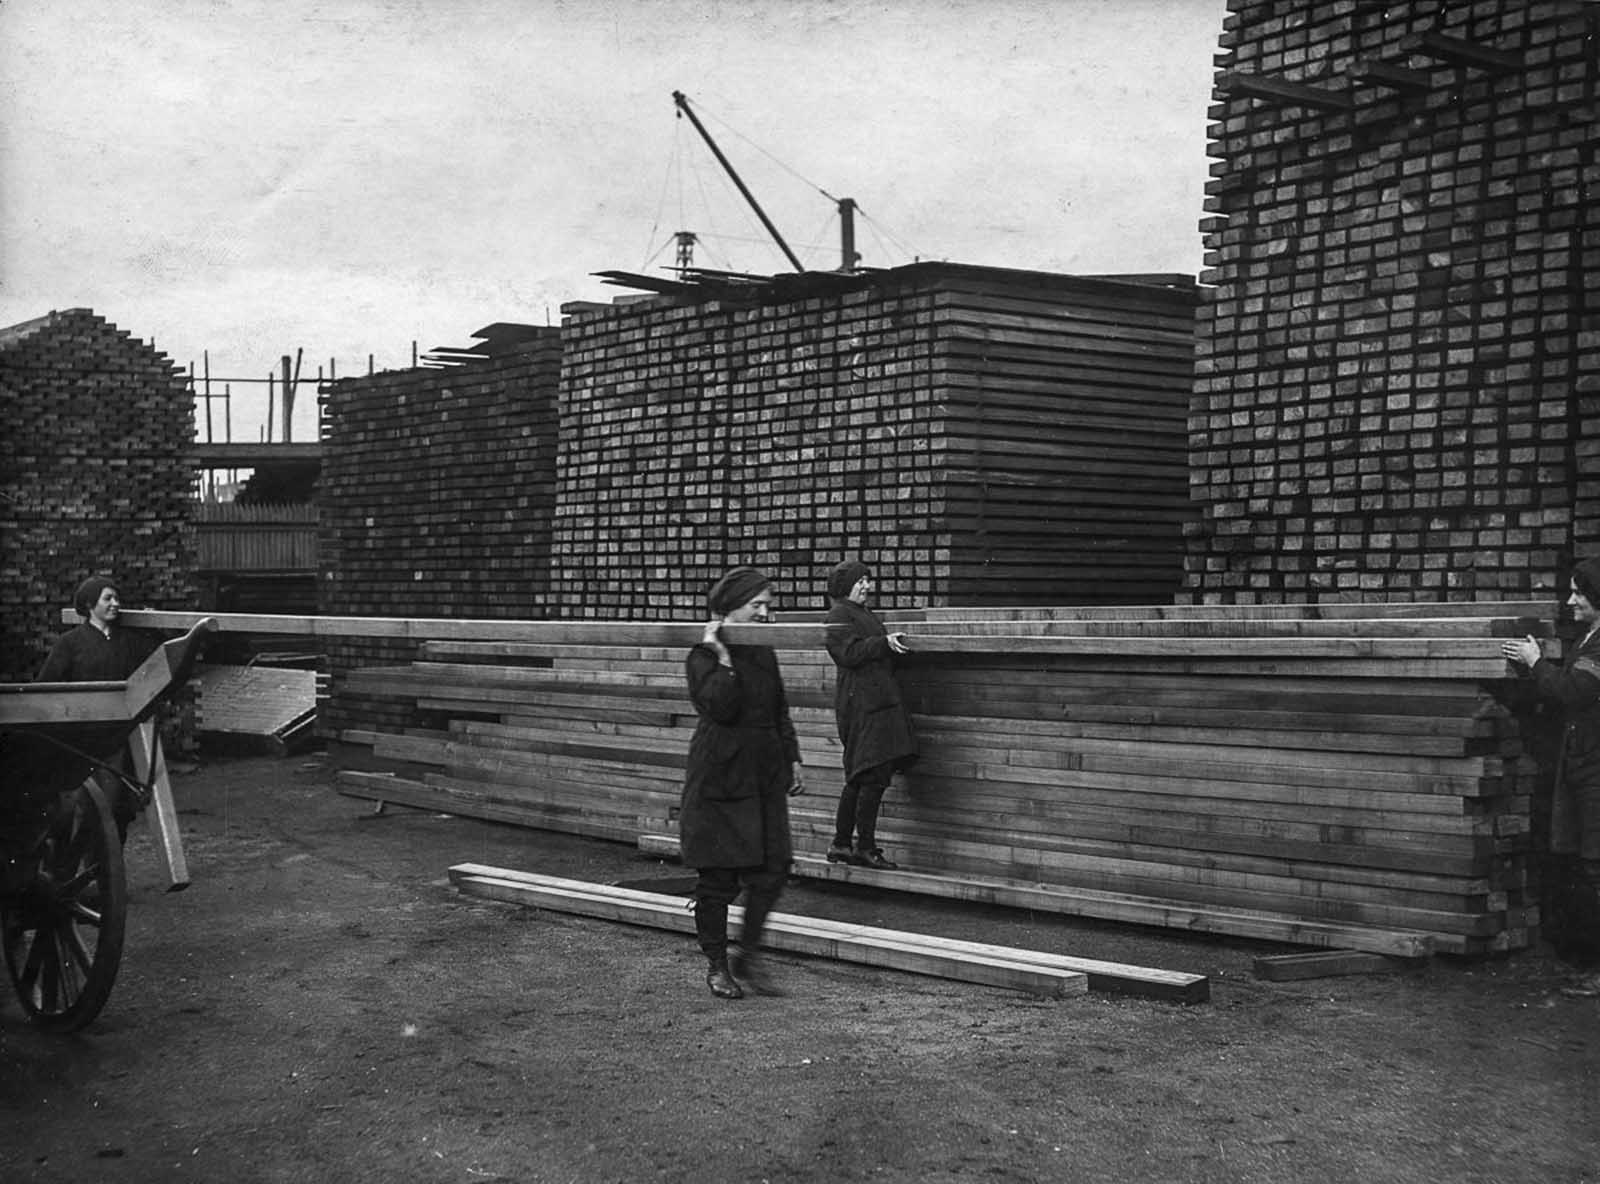 Workers haul wood in a lumber yard.